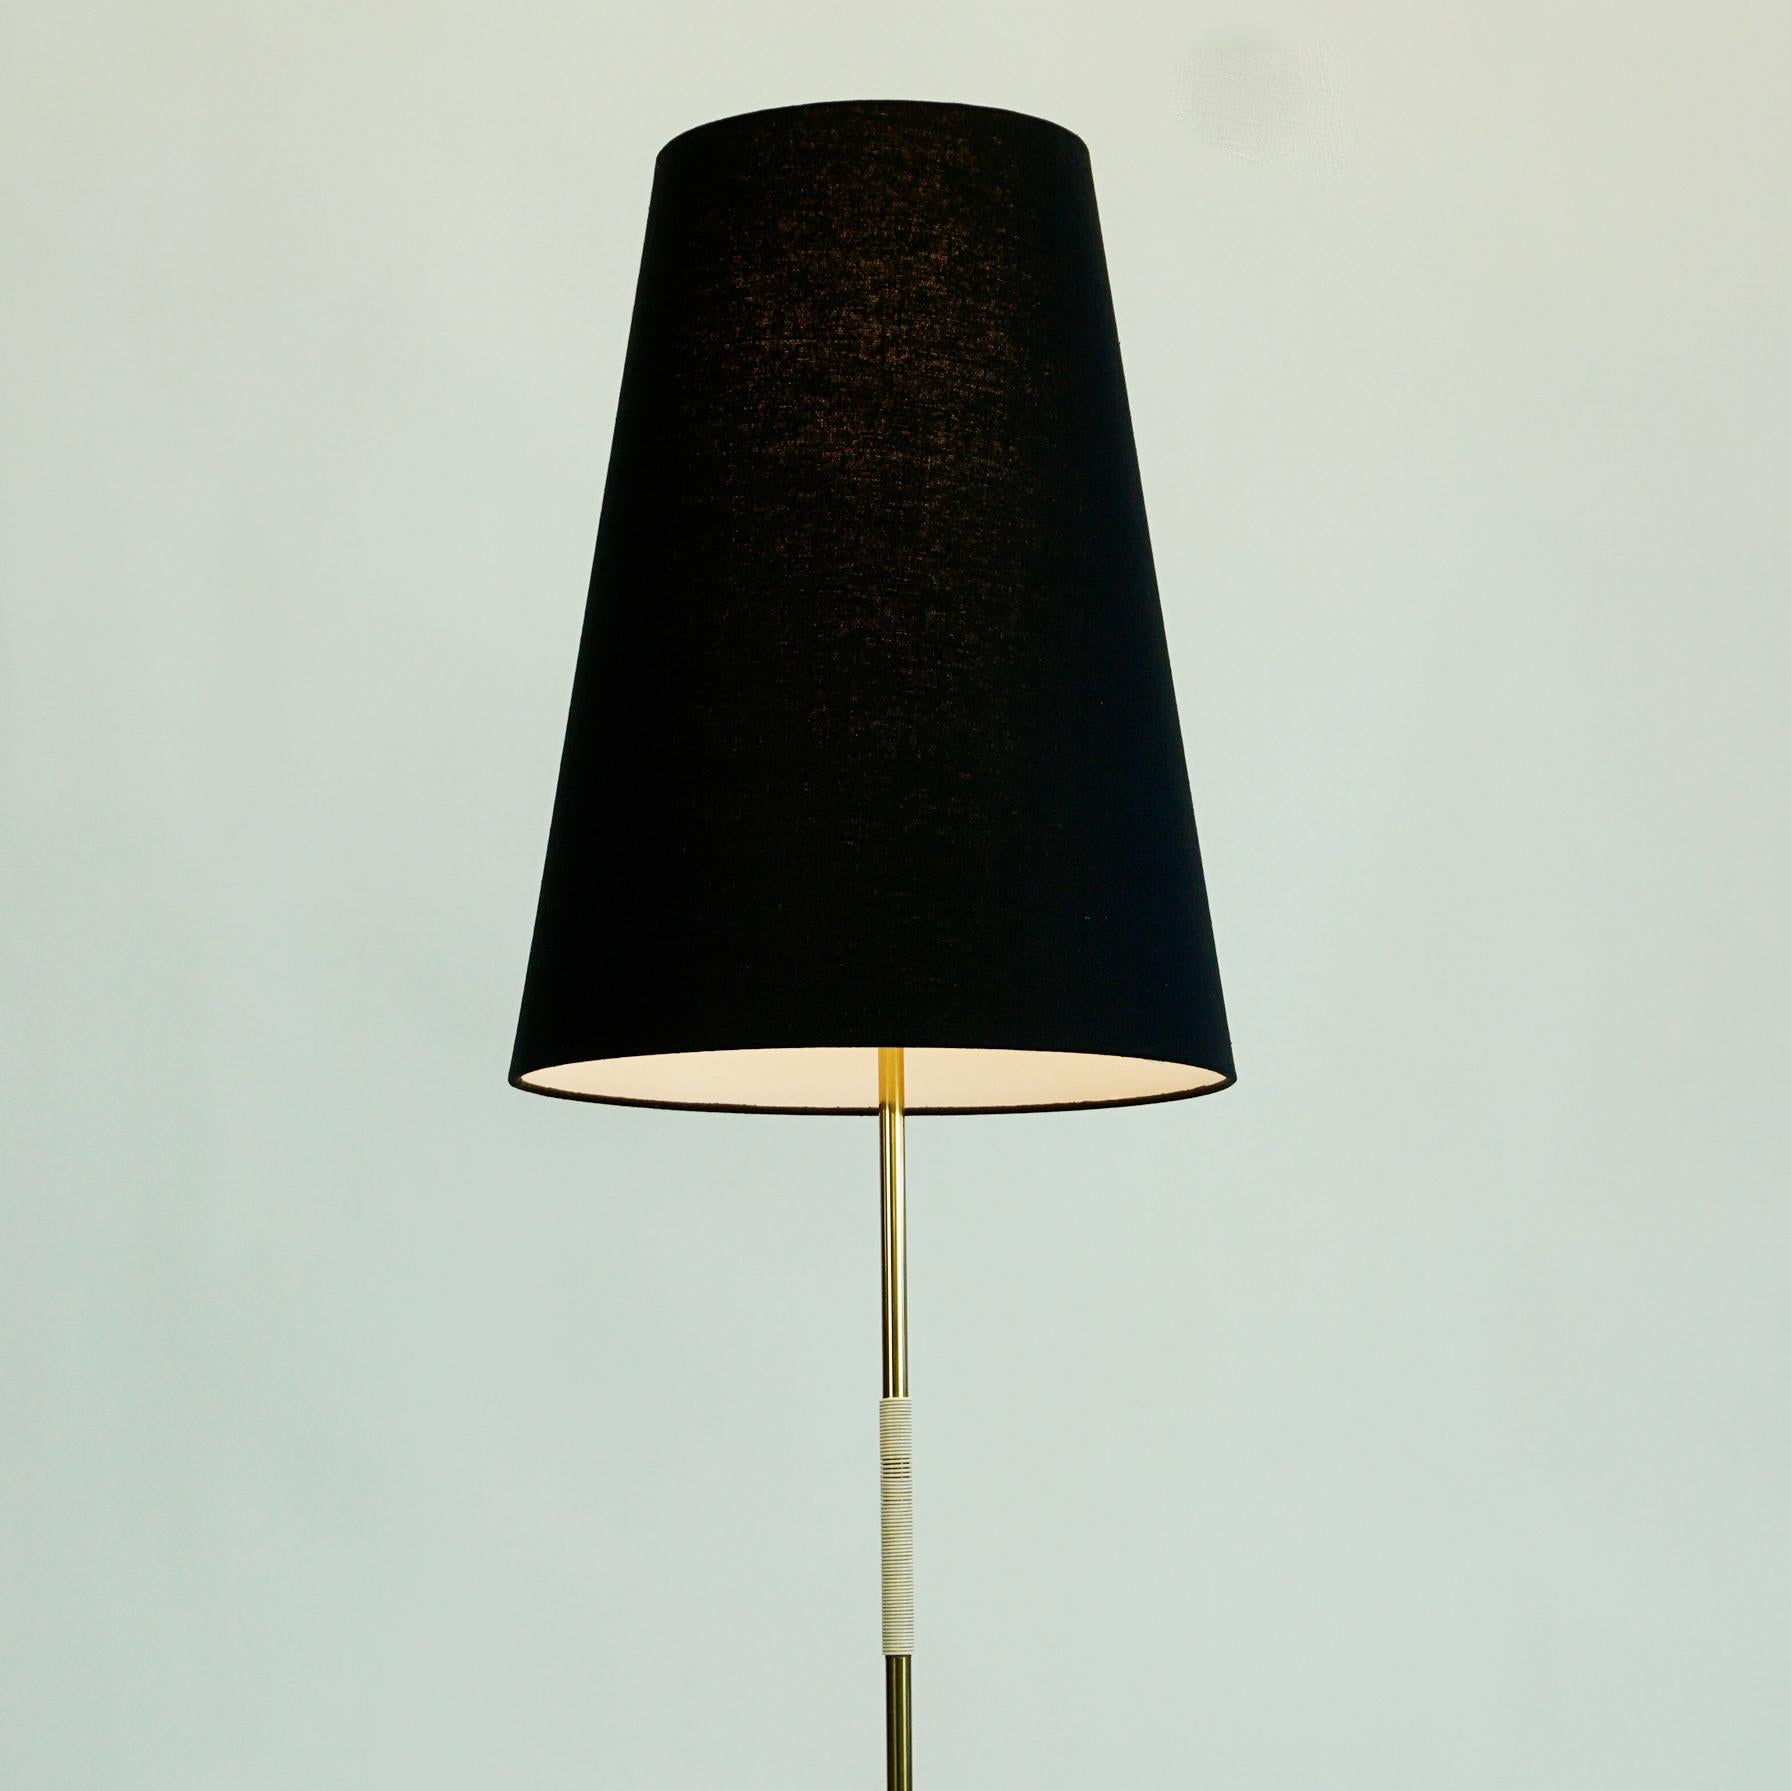 Austrian Midcentury Brass Floor Lamp Micheline with Black Shade by J.T. Kalmar 1